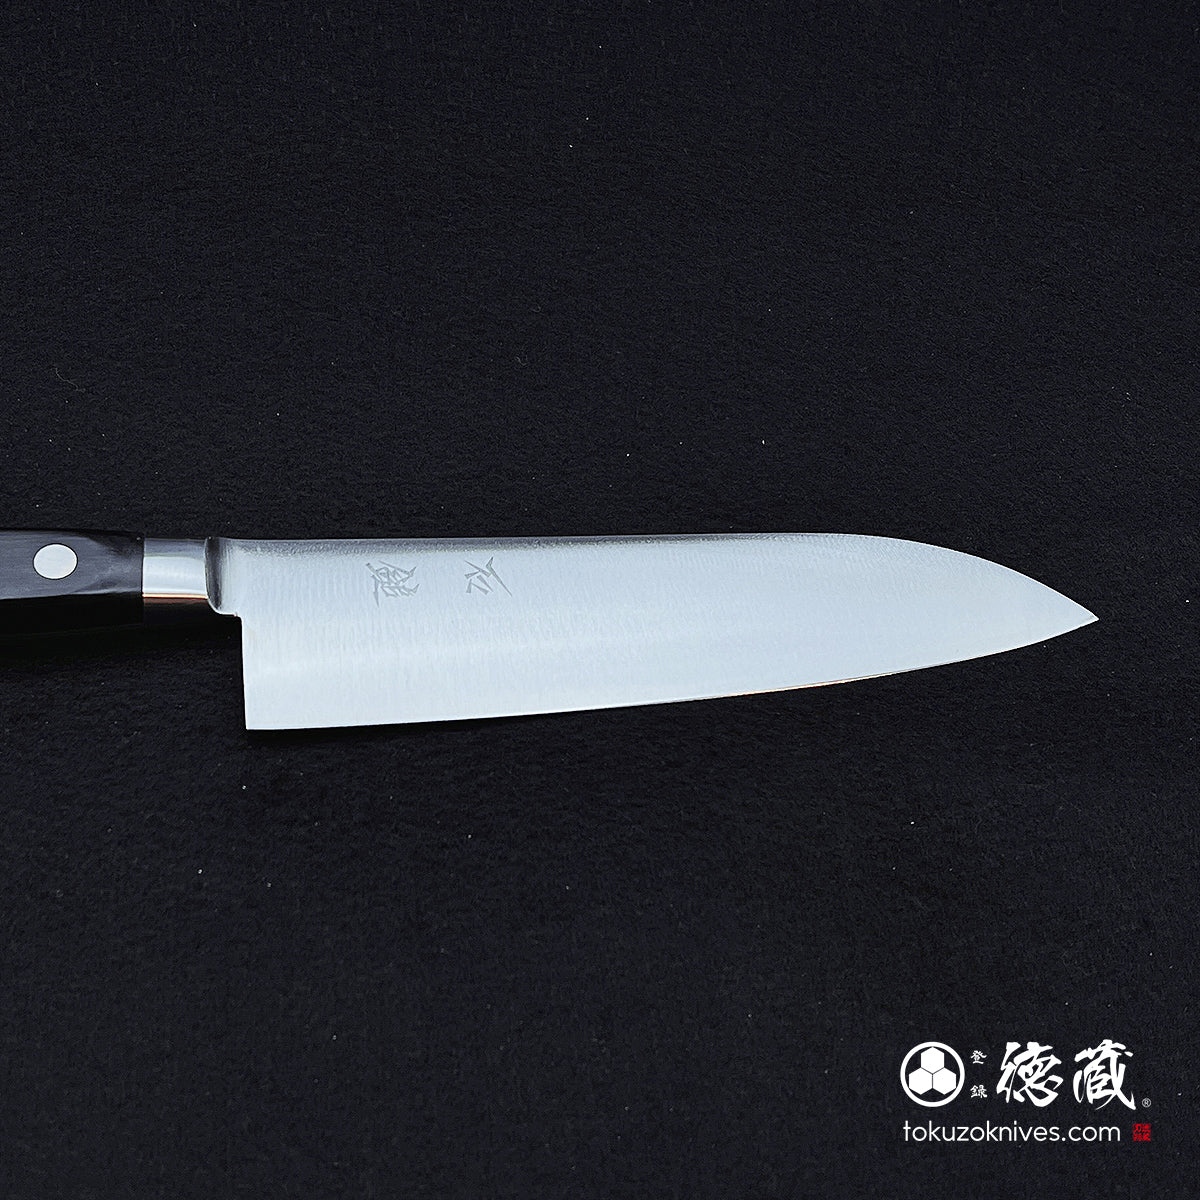 VG1 Santoku knife, black handle